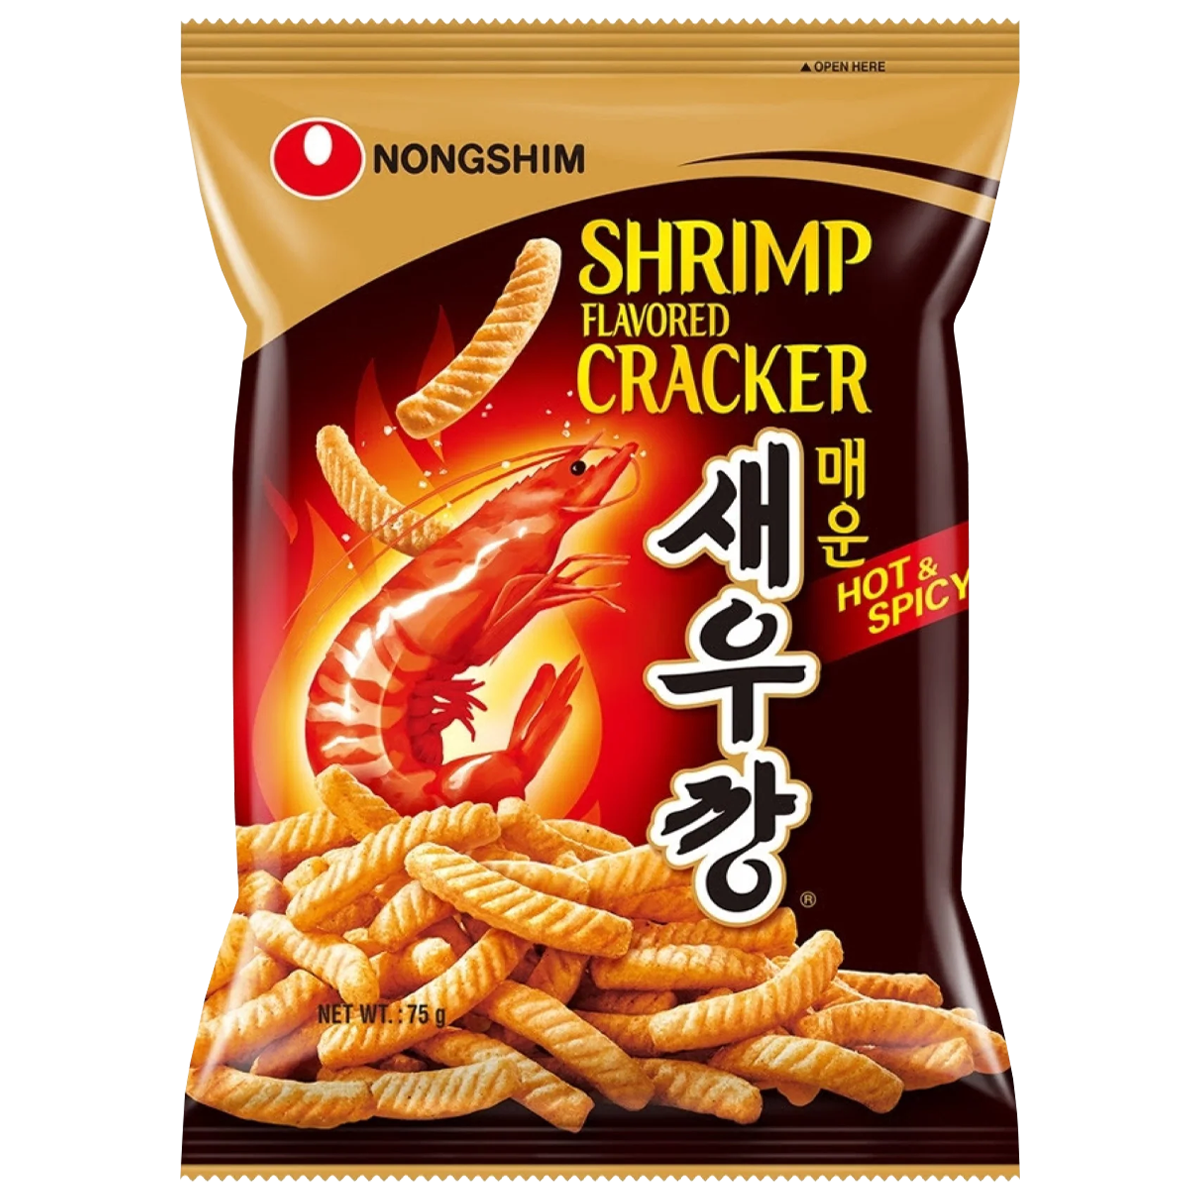 Shrimp Cracker, Patatine giapponesi al gambero piccanti